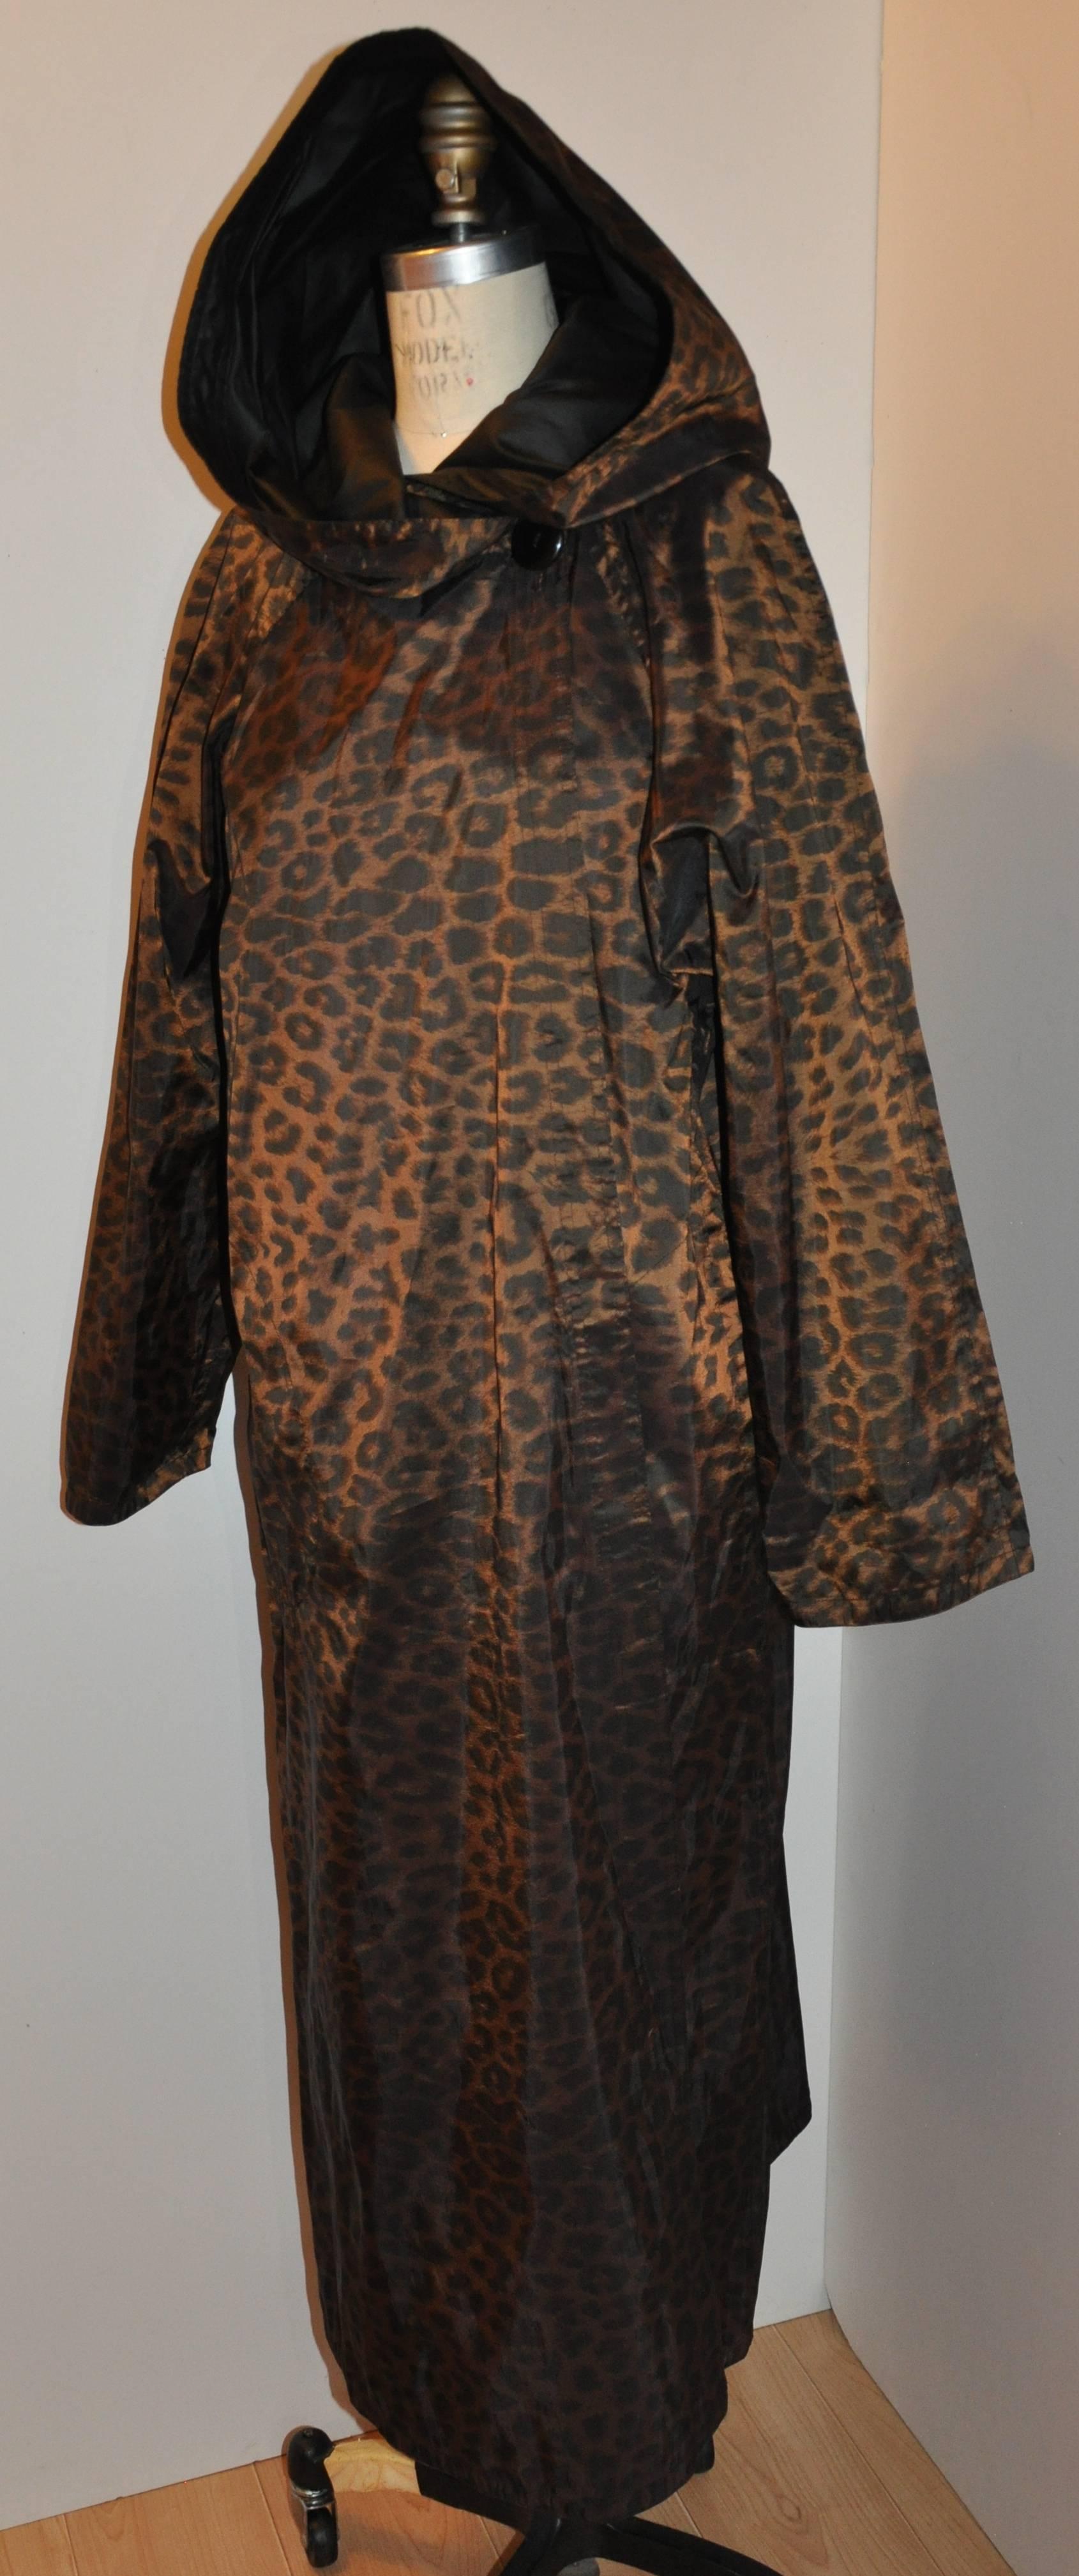 Women's or Men's Floor-Length Reversible Black & Leopard Print Hooded Raincoat